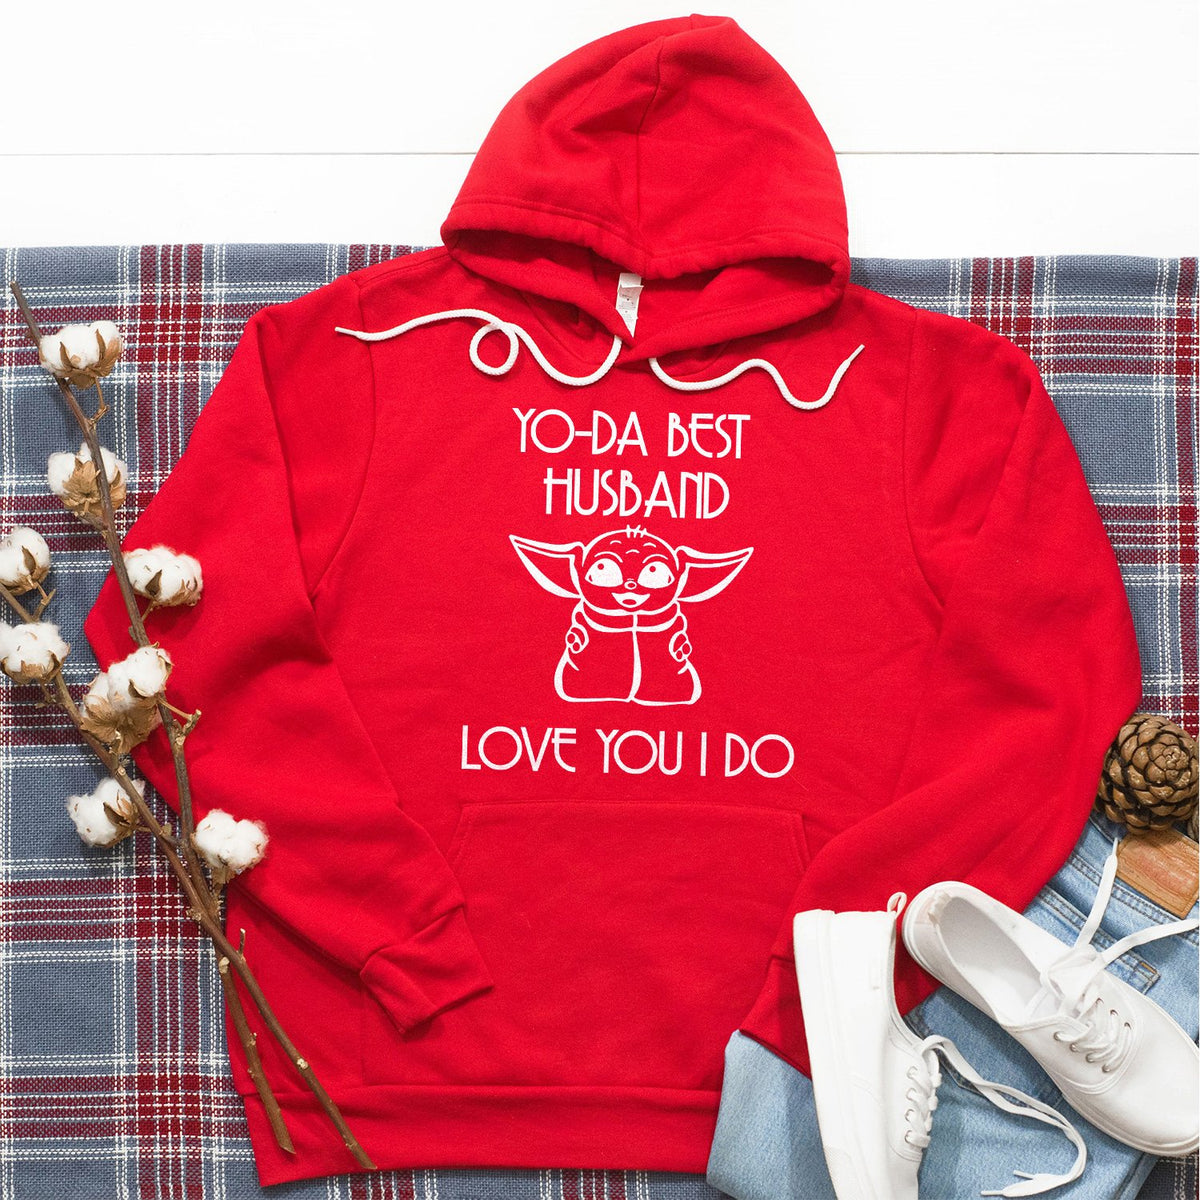 Yo-Da Best Husband Love You I Do - Hoodie Sweatshirt